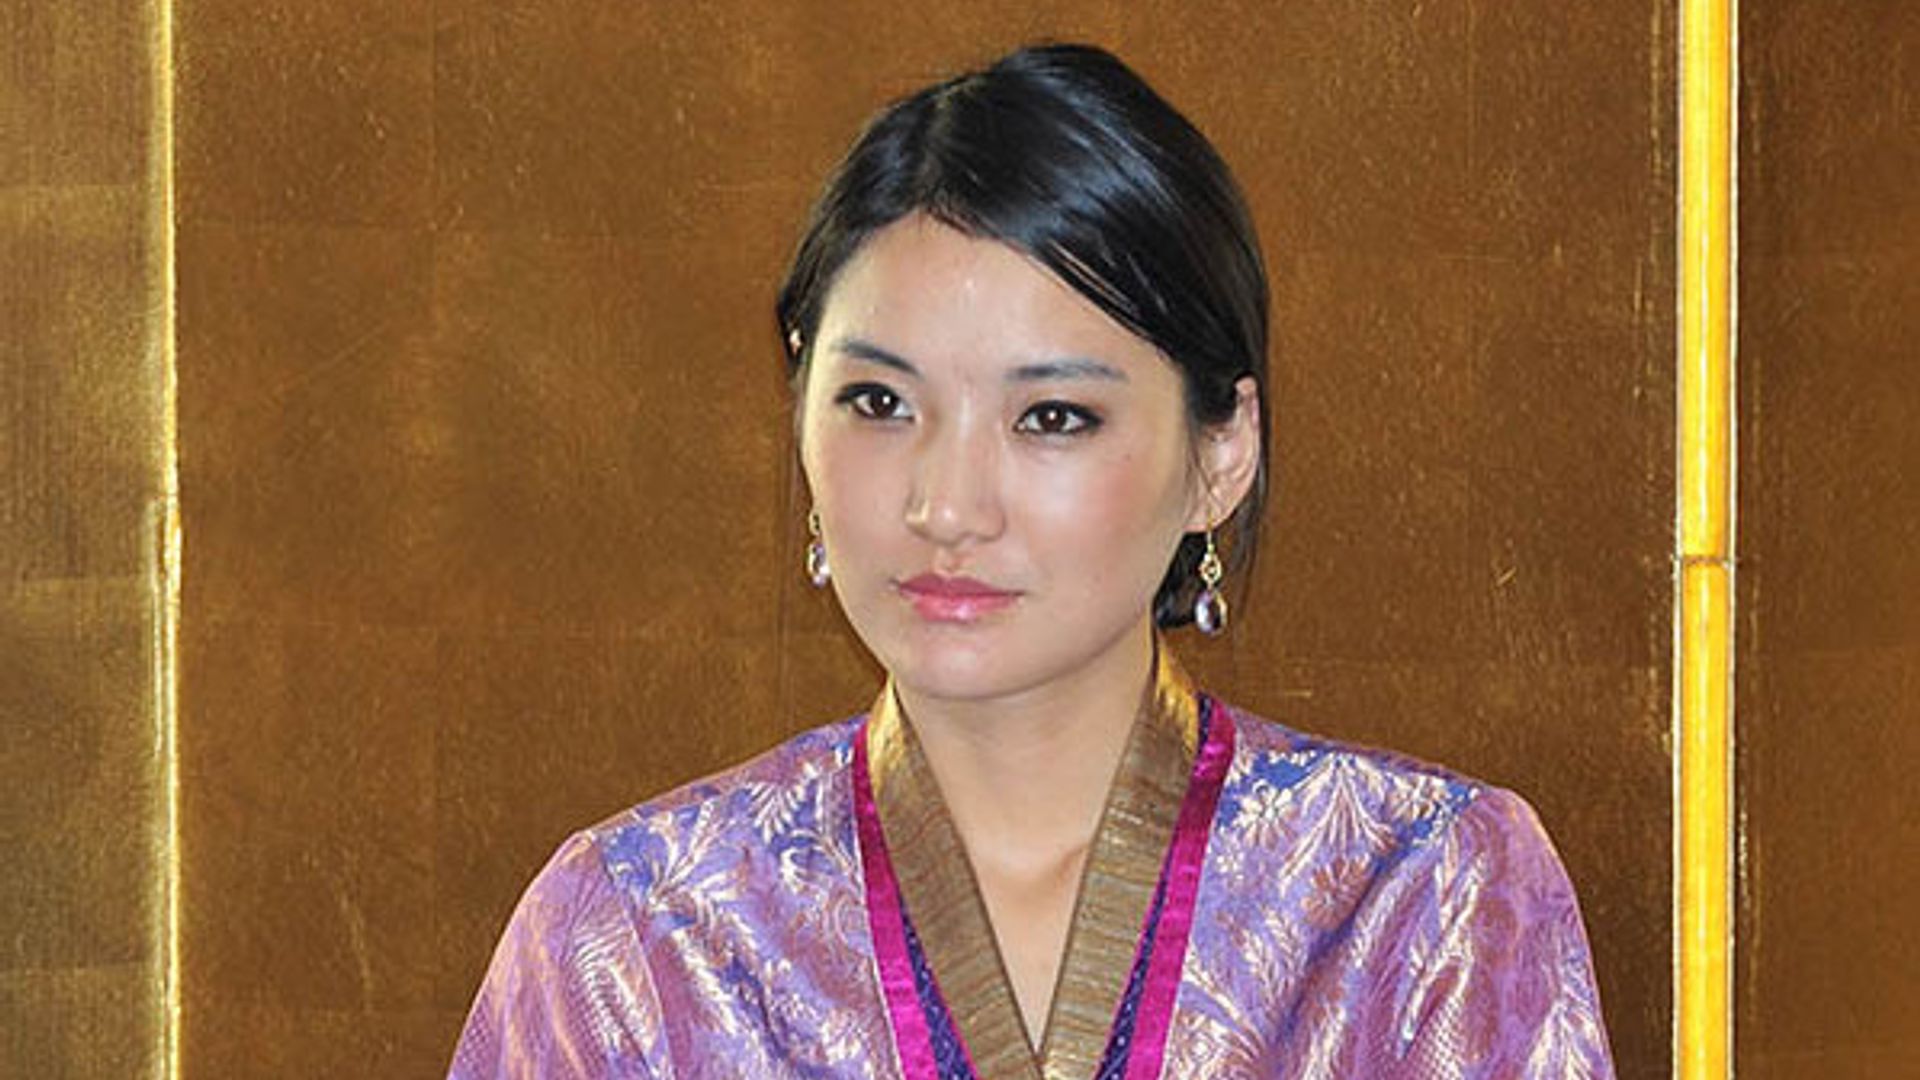 Queen Jetsun Pema of Bhutan celebrates 30th birthday with regal portrait